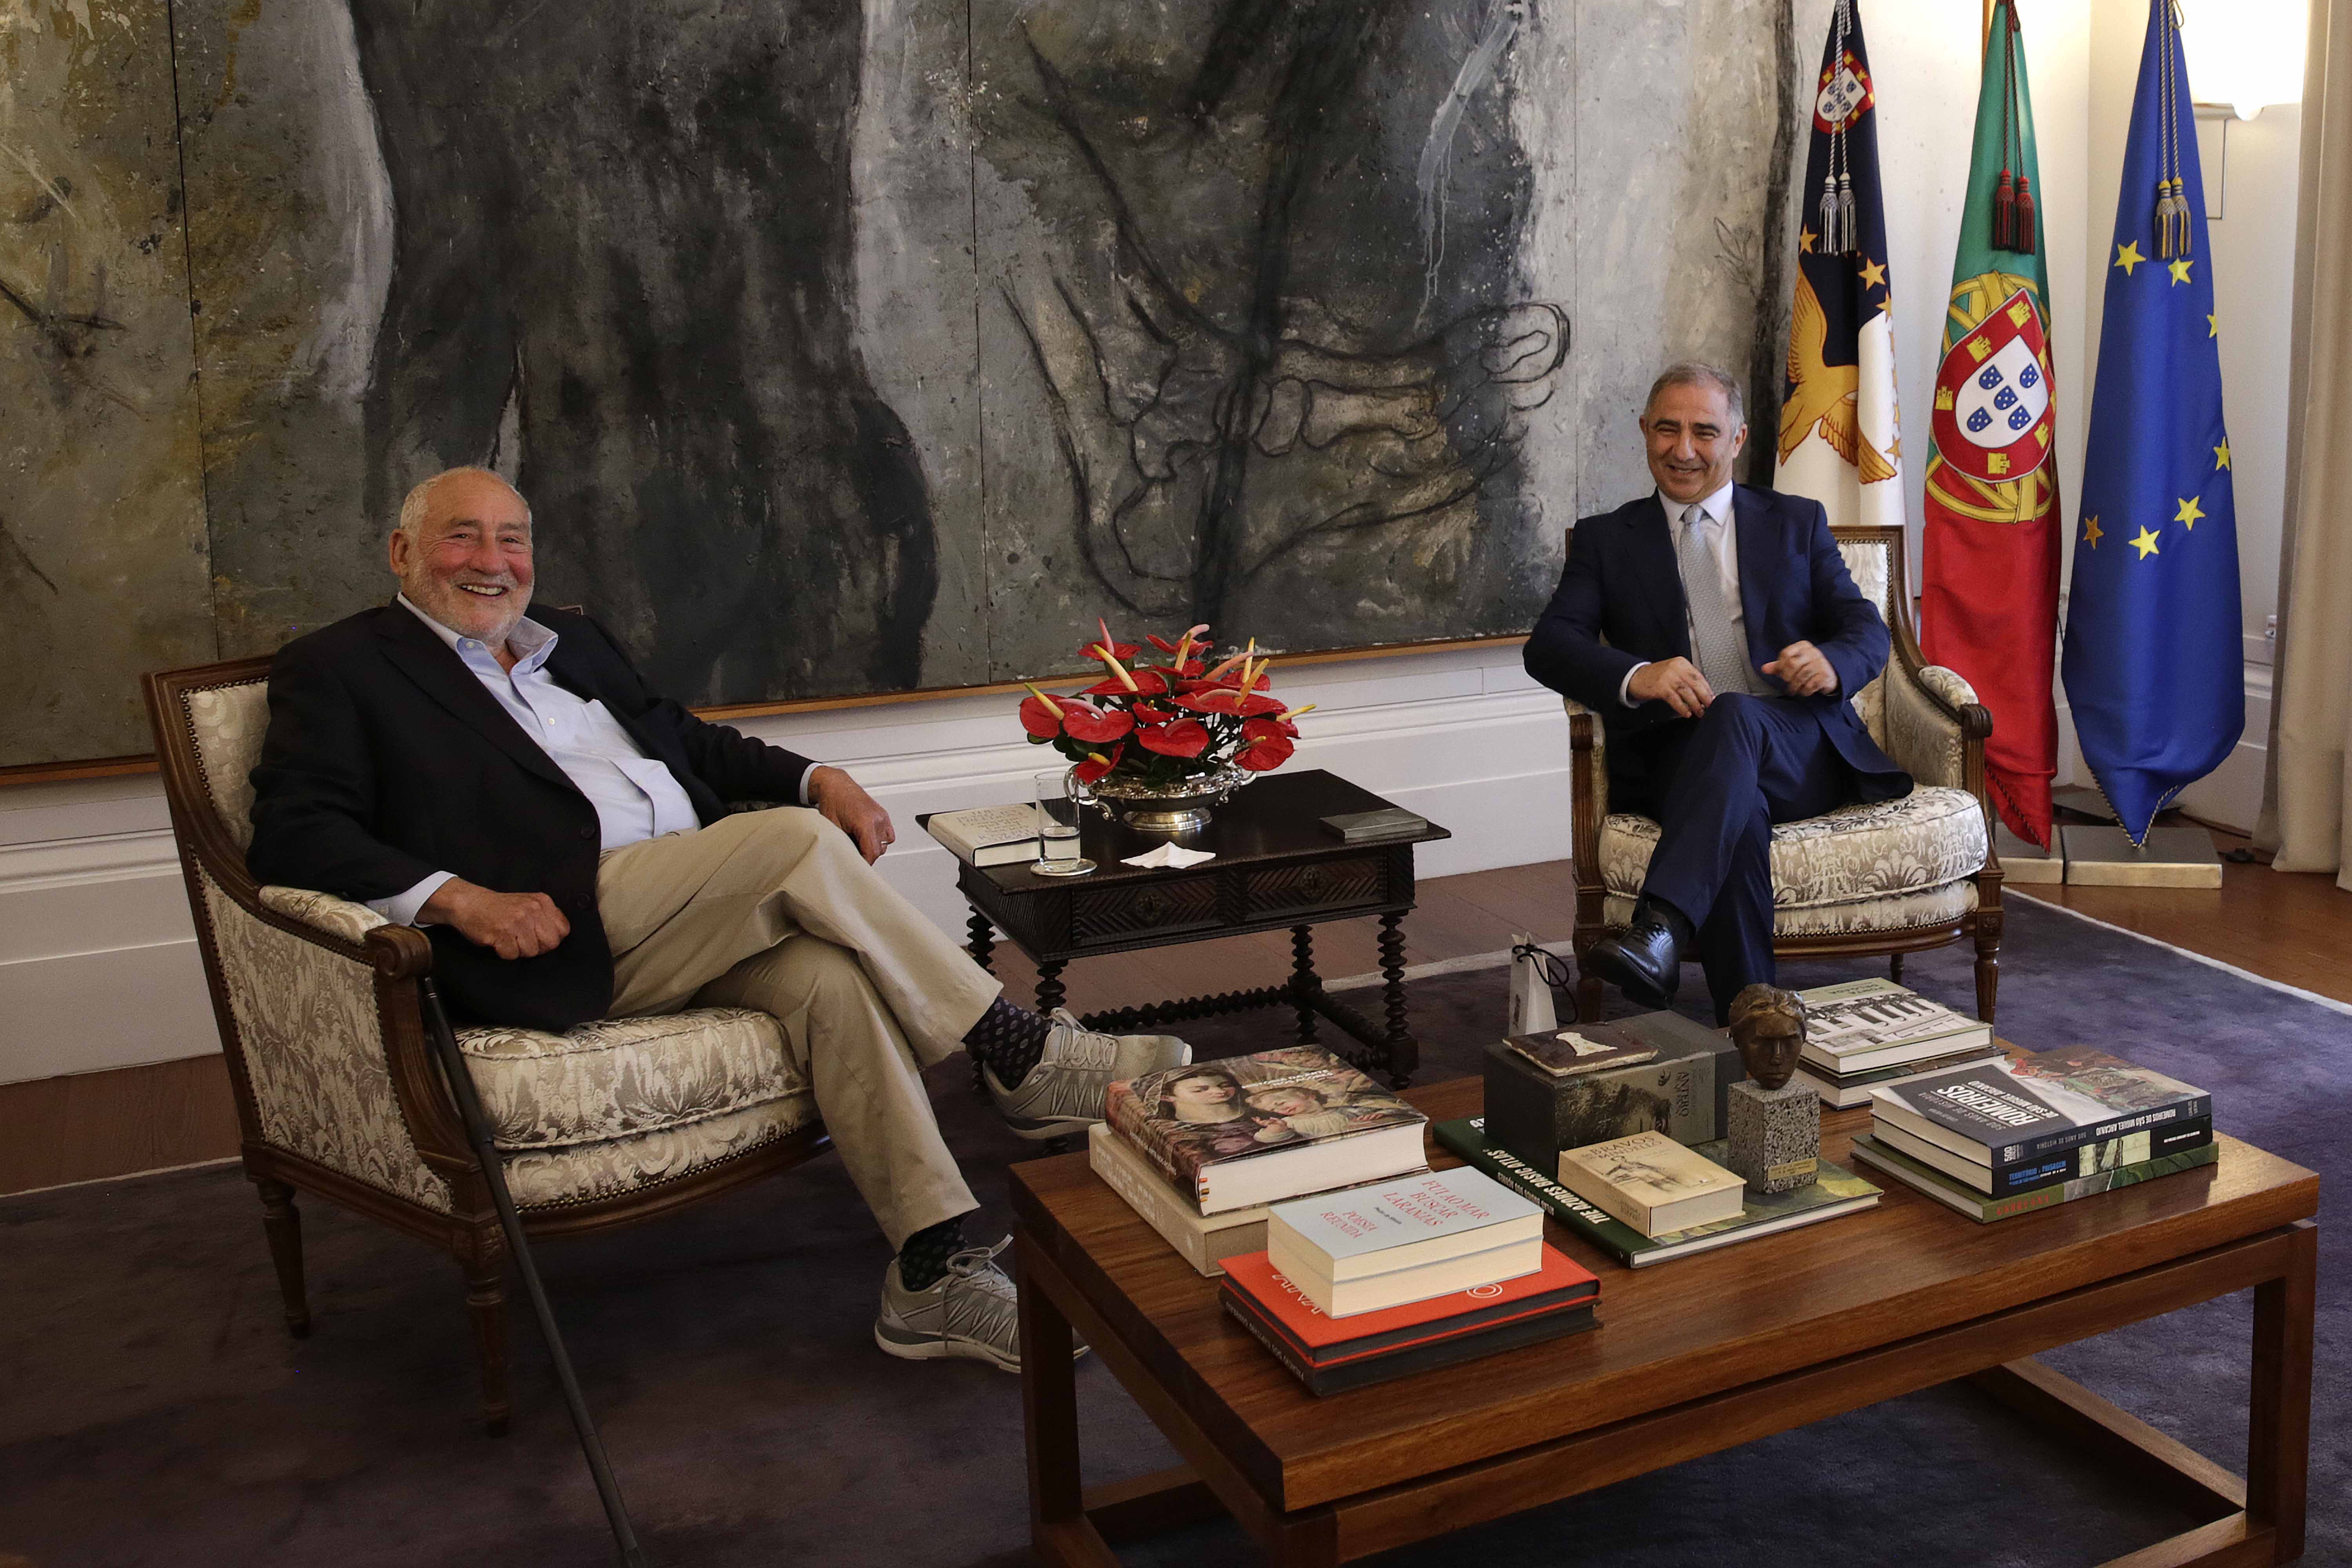 José Manuel Bolieiro received Joseph Stiglitz, 2001 Nobel Prize in Economic Sciences